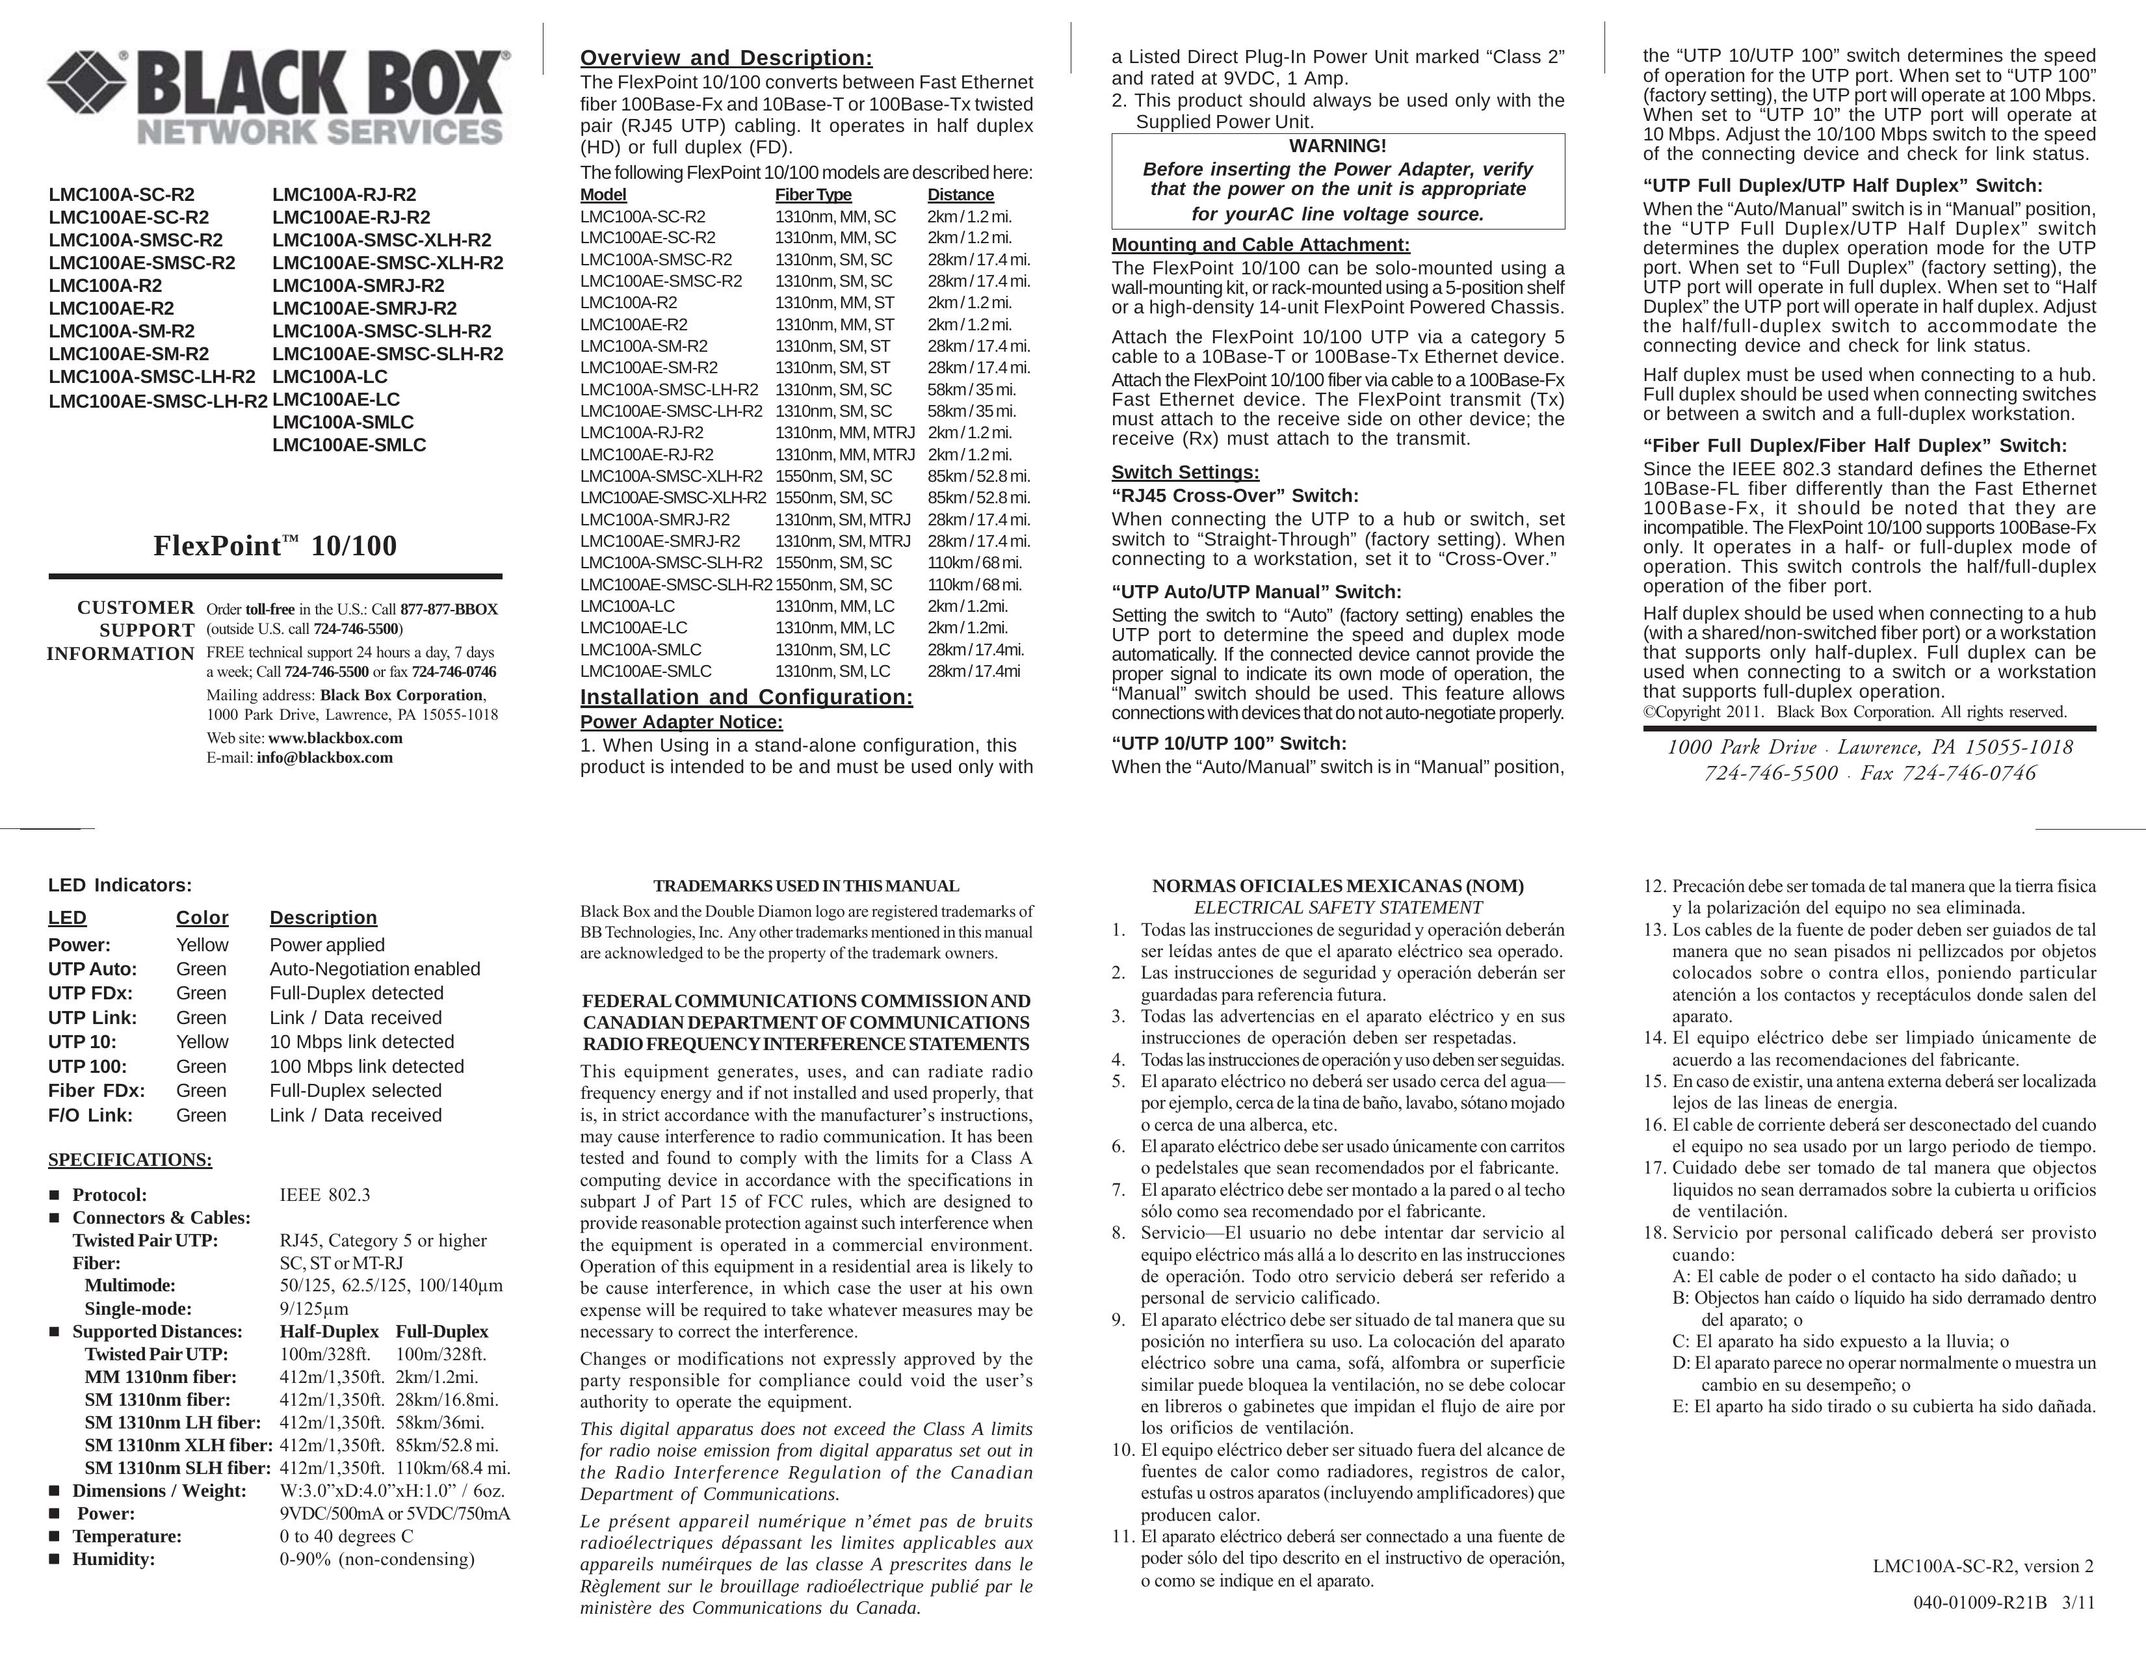 Black Box LMC100A-SMSC-LH-R2 Network Cables User Manual